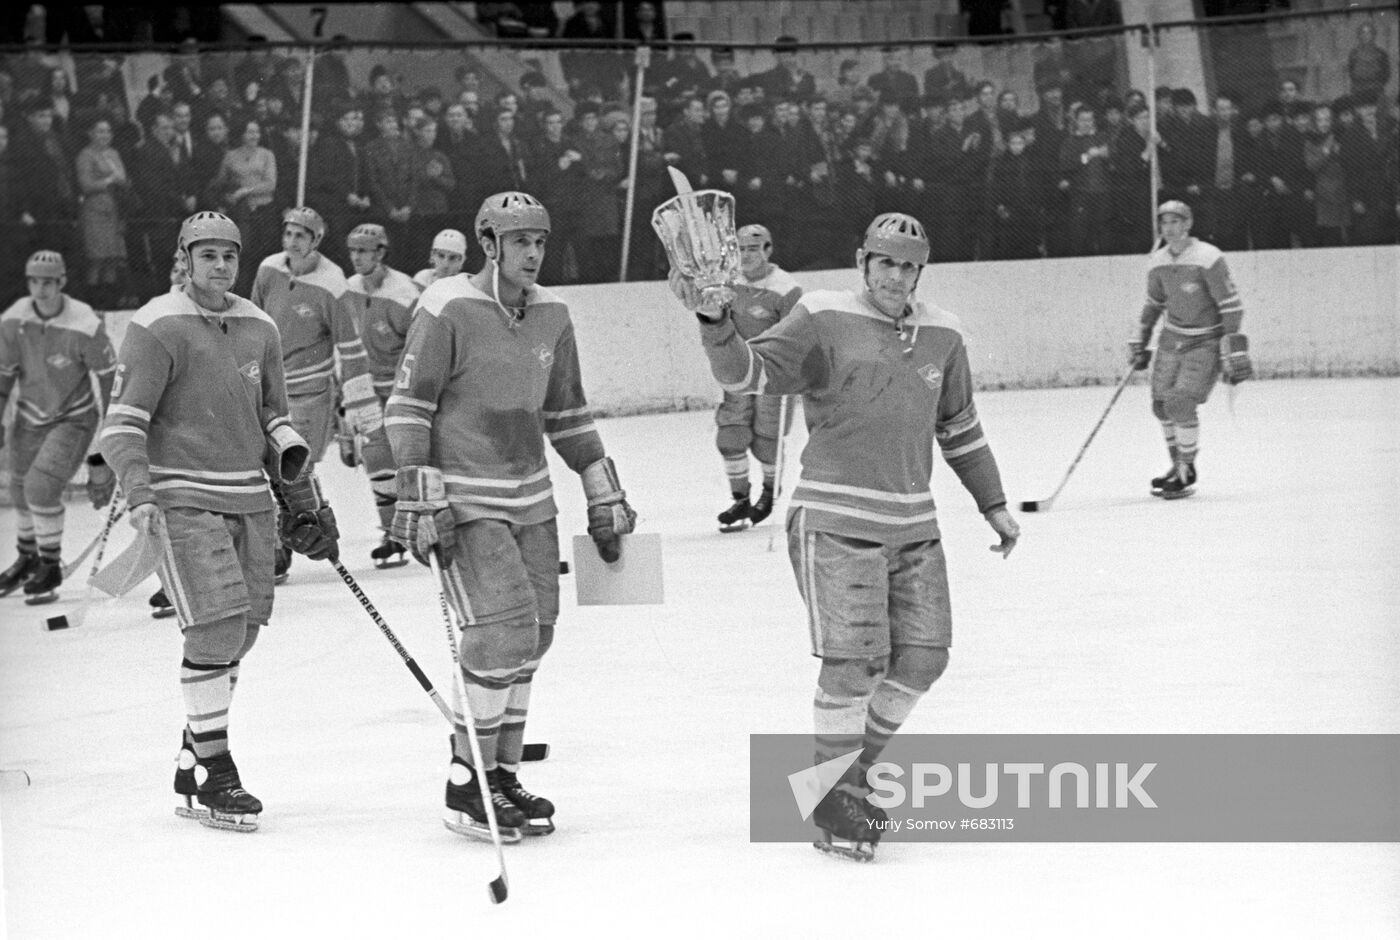 USSR Ice Hockey Championship winners making a lap of honor